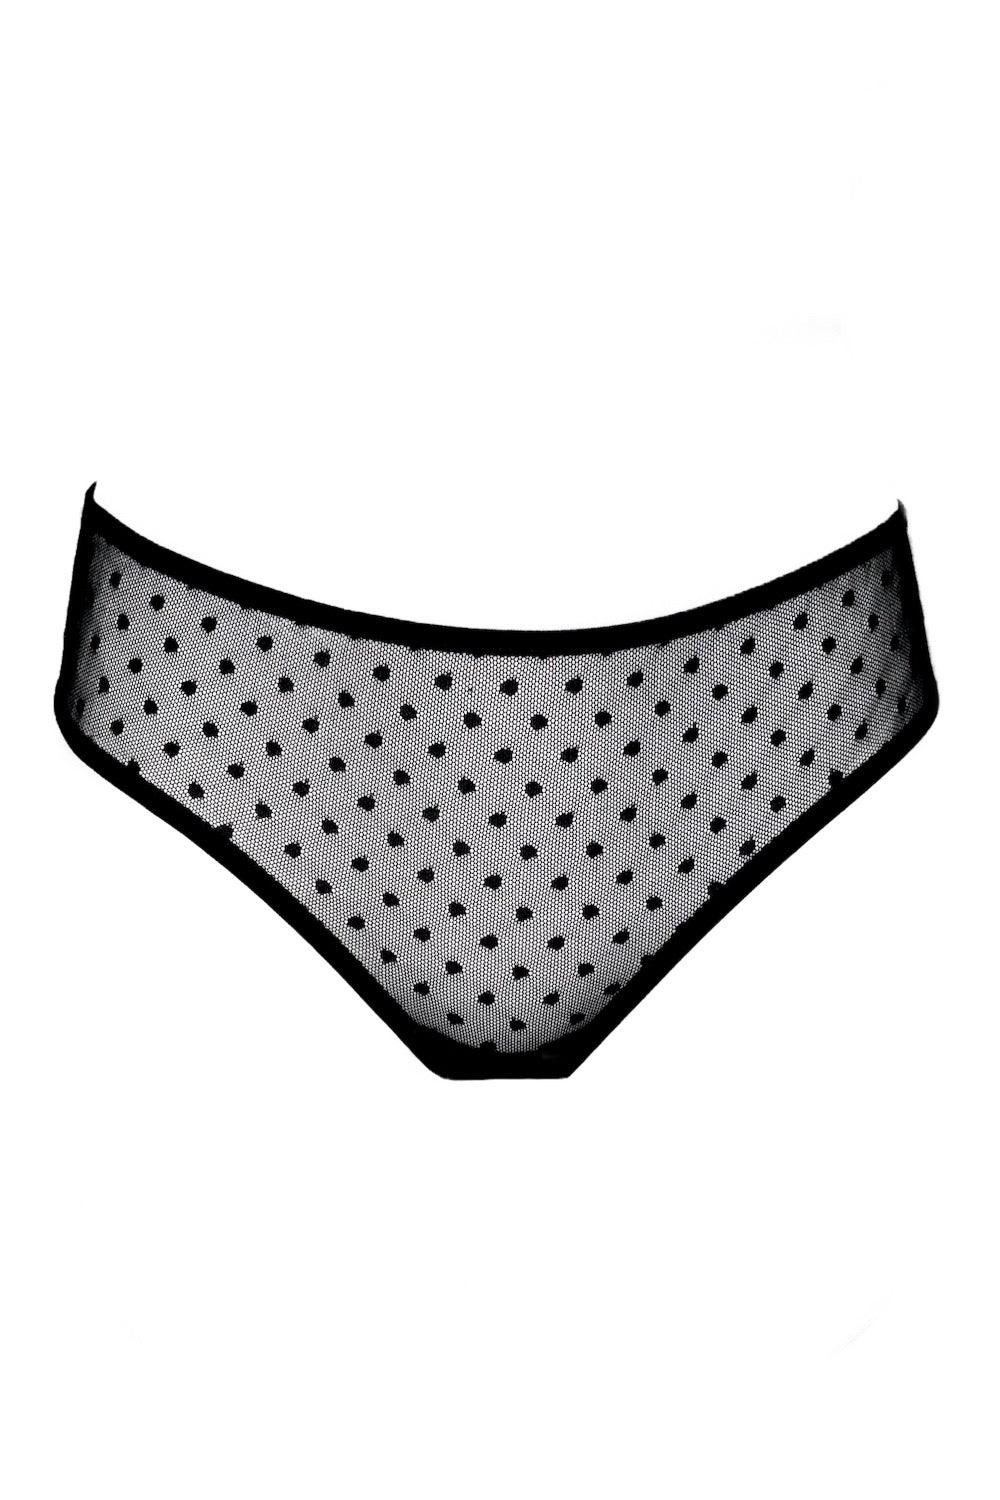 Frilly Black dots slip panties - yesUndress